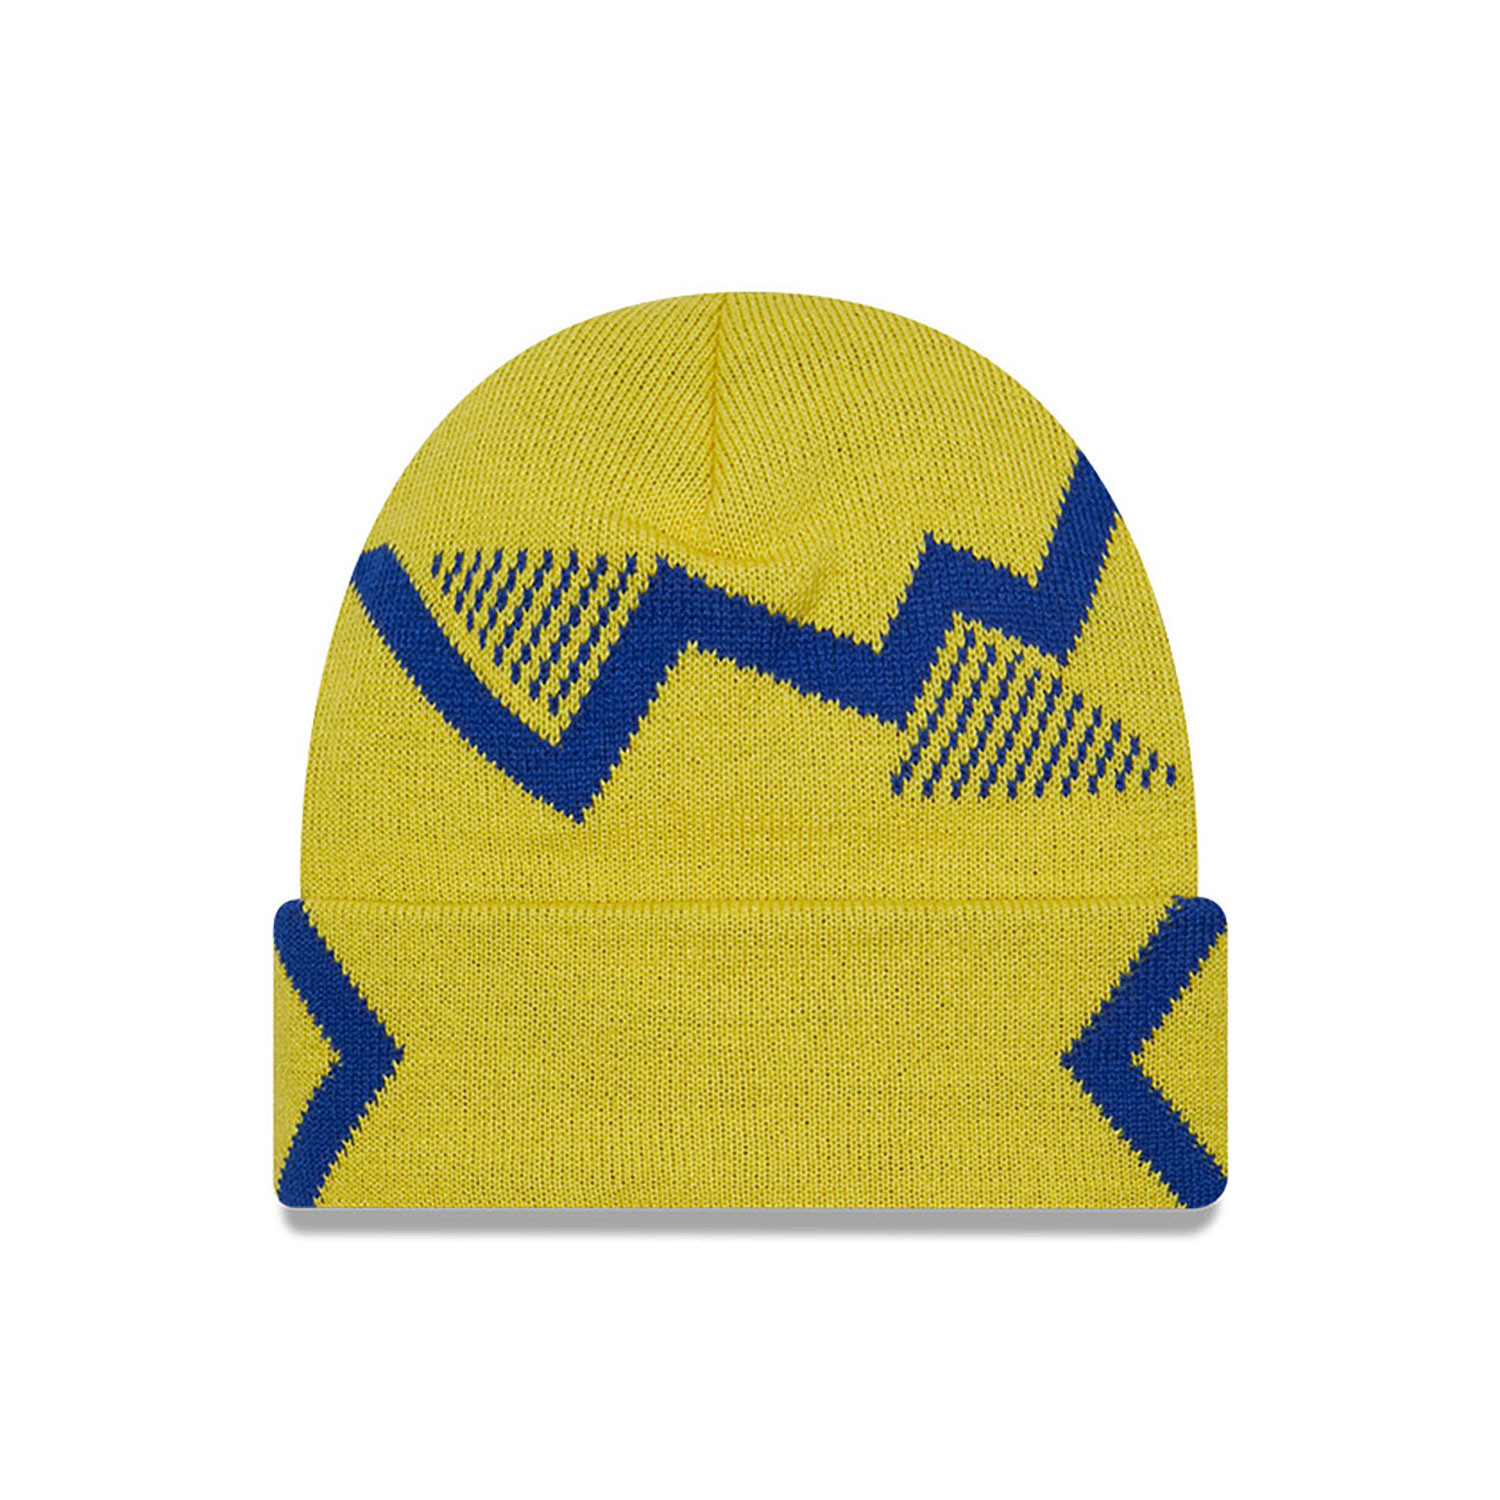 Chelsea FC 1992 Lion Yellow Cuff Knit Beanie Hat